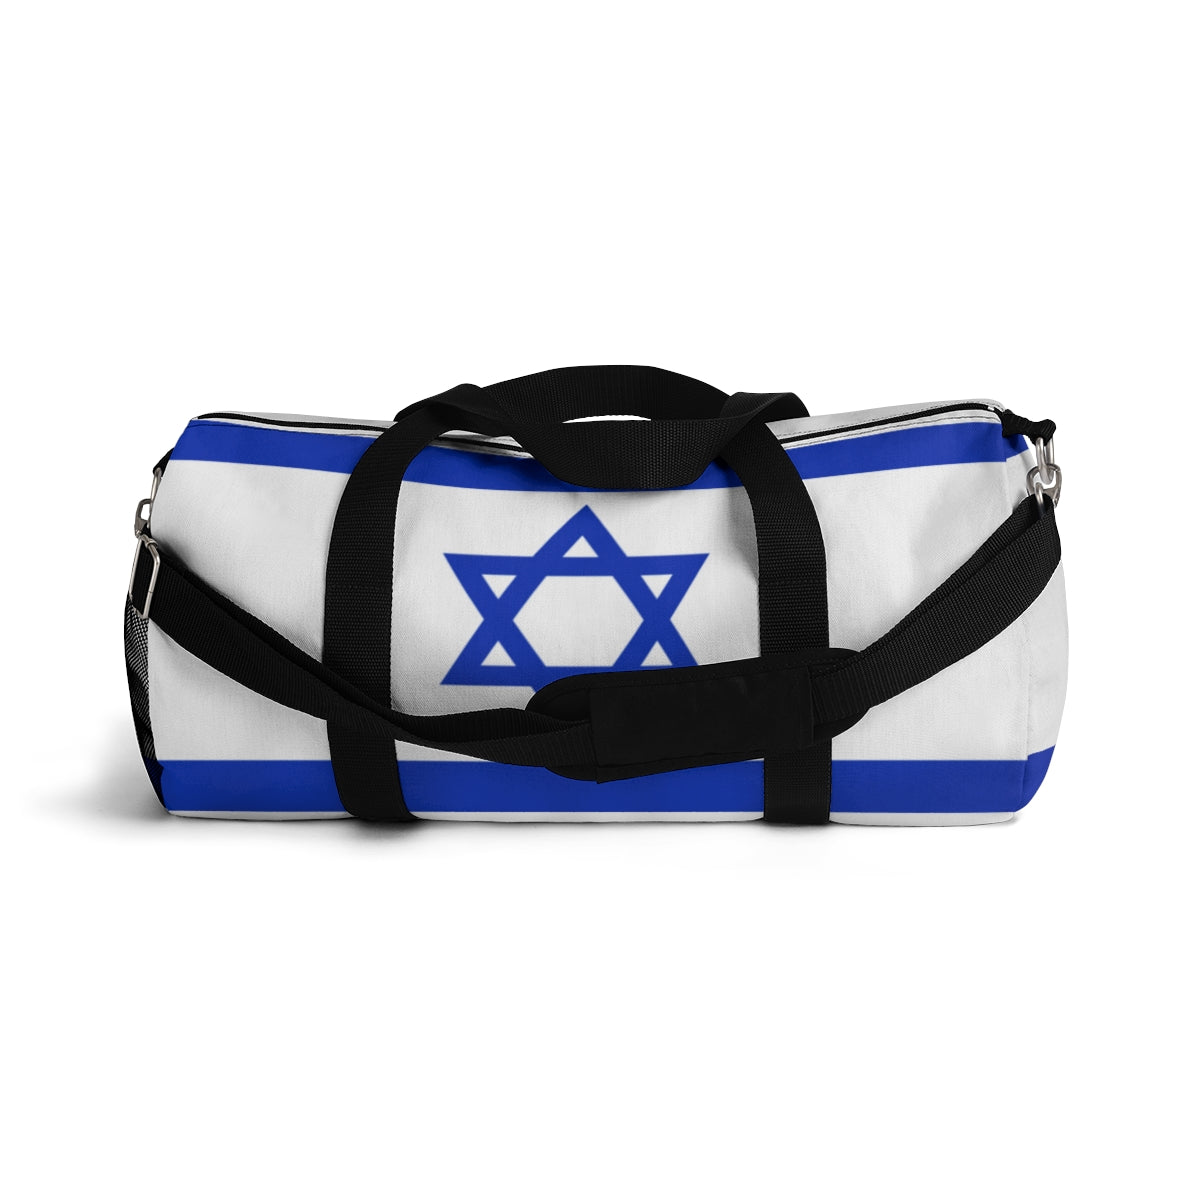 Israeli Flag Duffel Bag